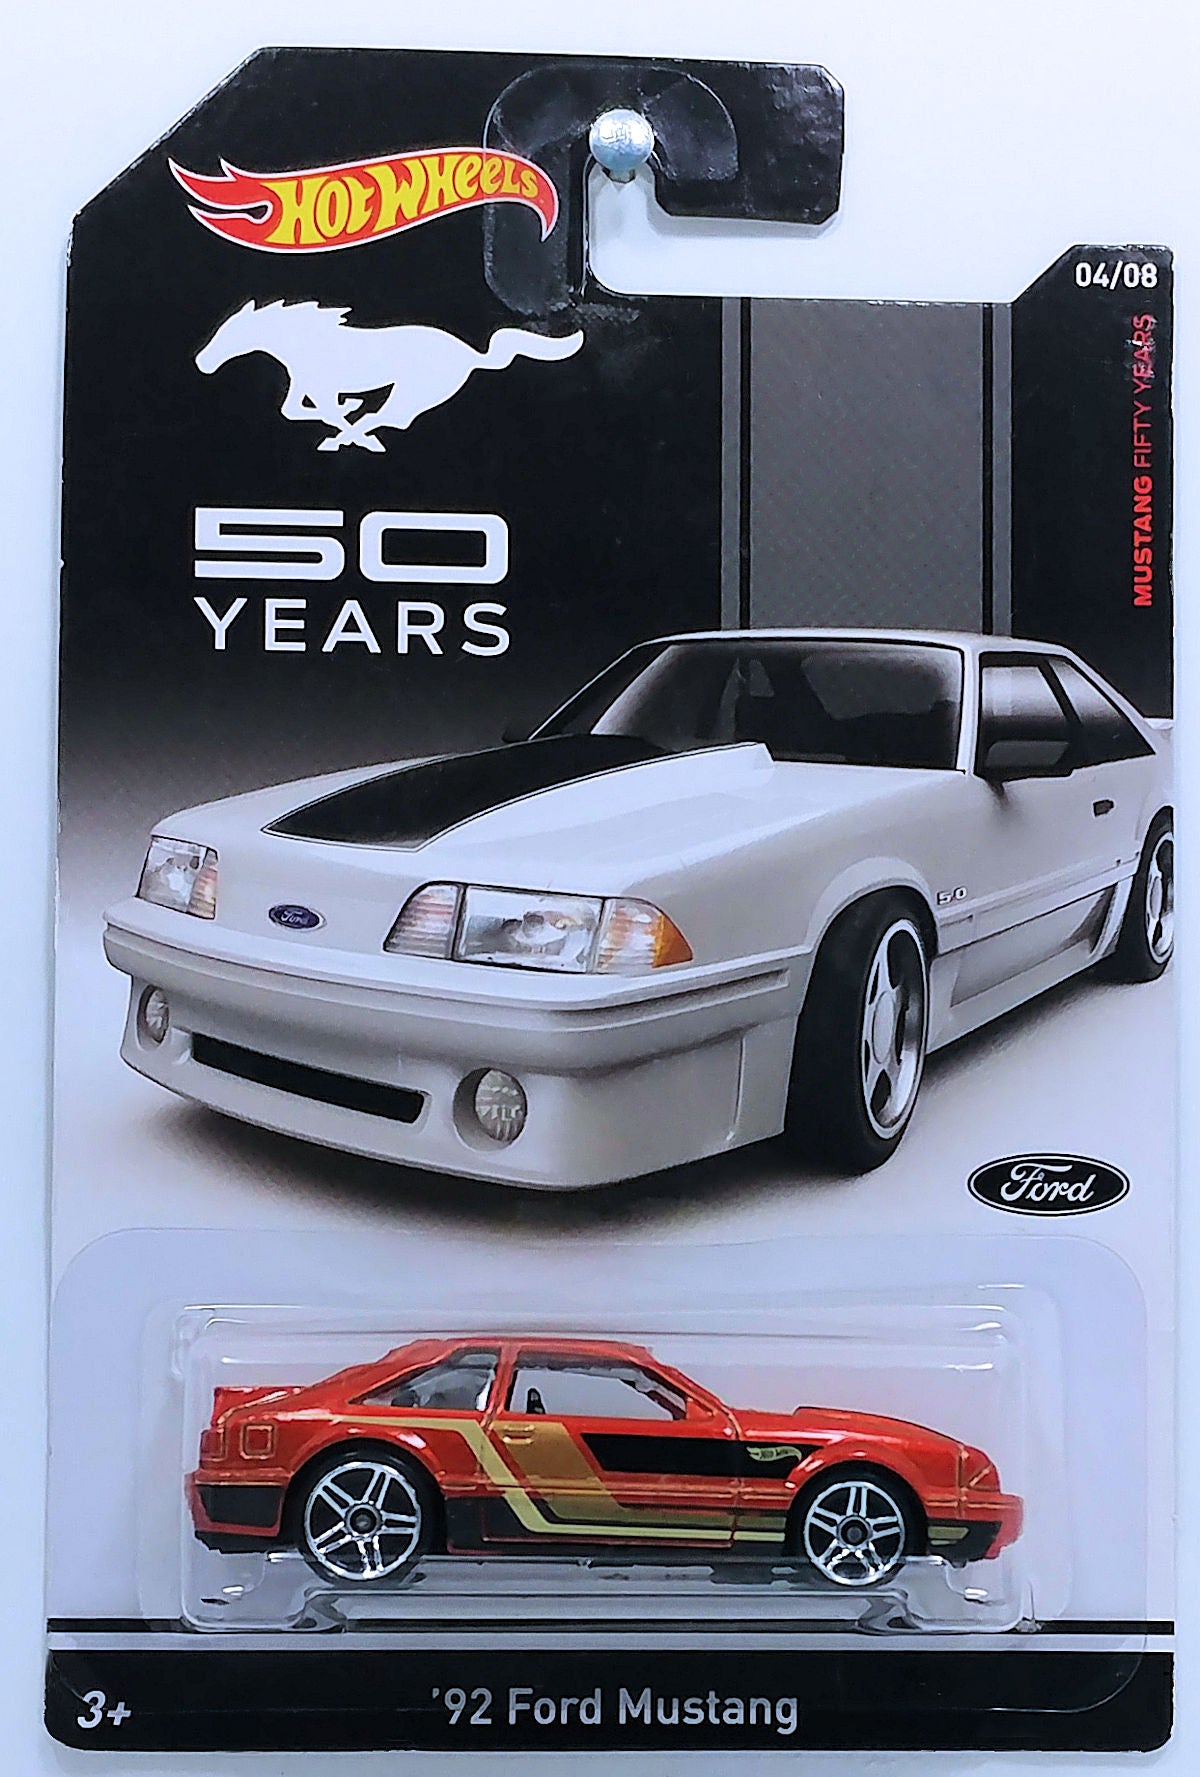 Hot Wheels 2014 - Mustang 50 Years Series 04/08 - '92 Ford Mustang - Orange - Walmart Exclusive - USA